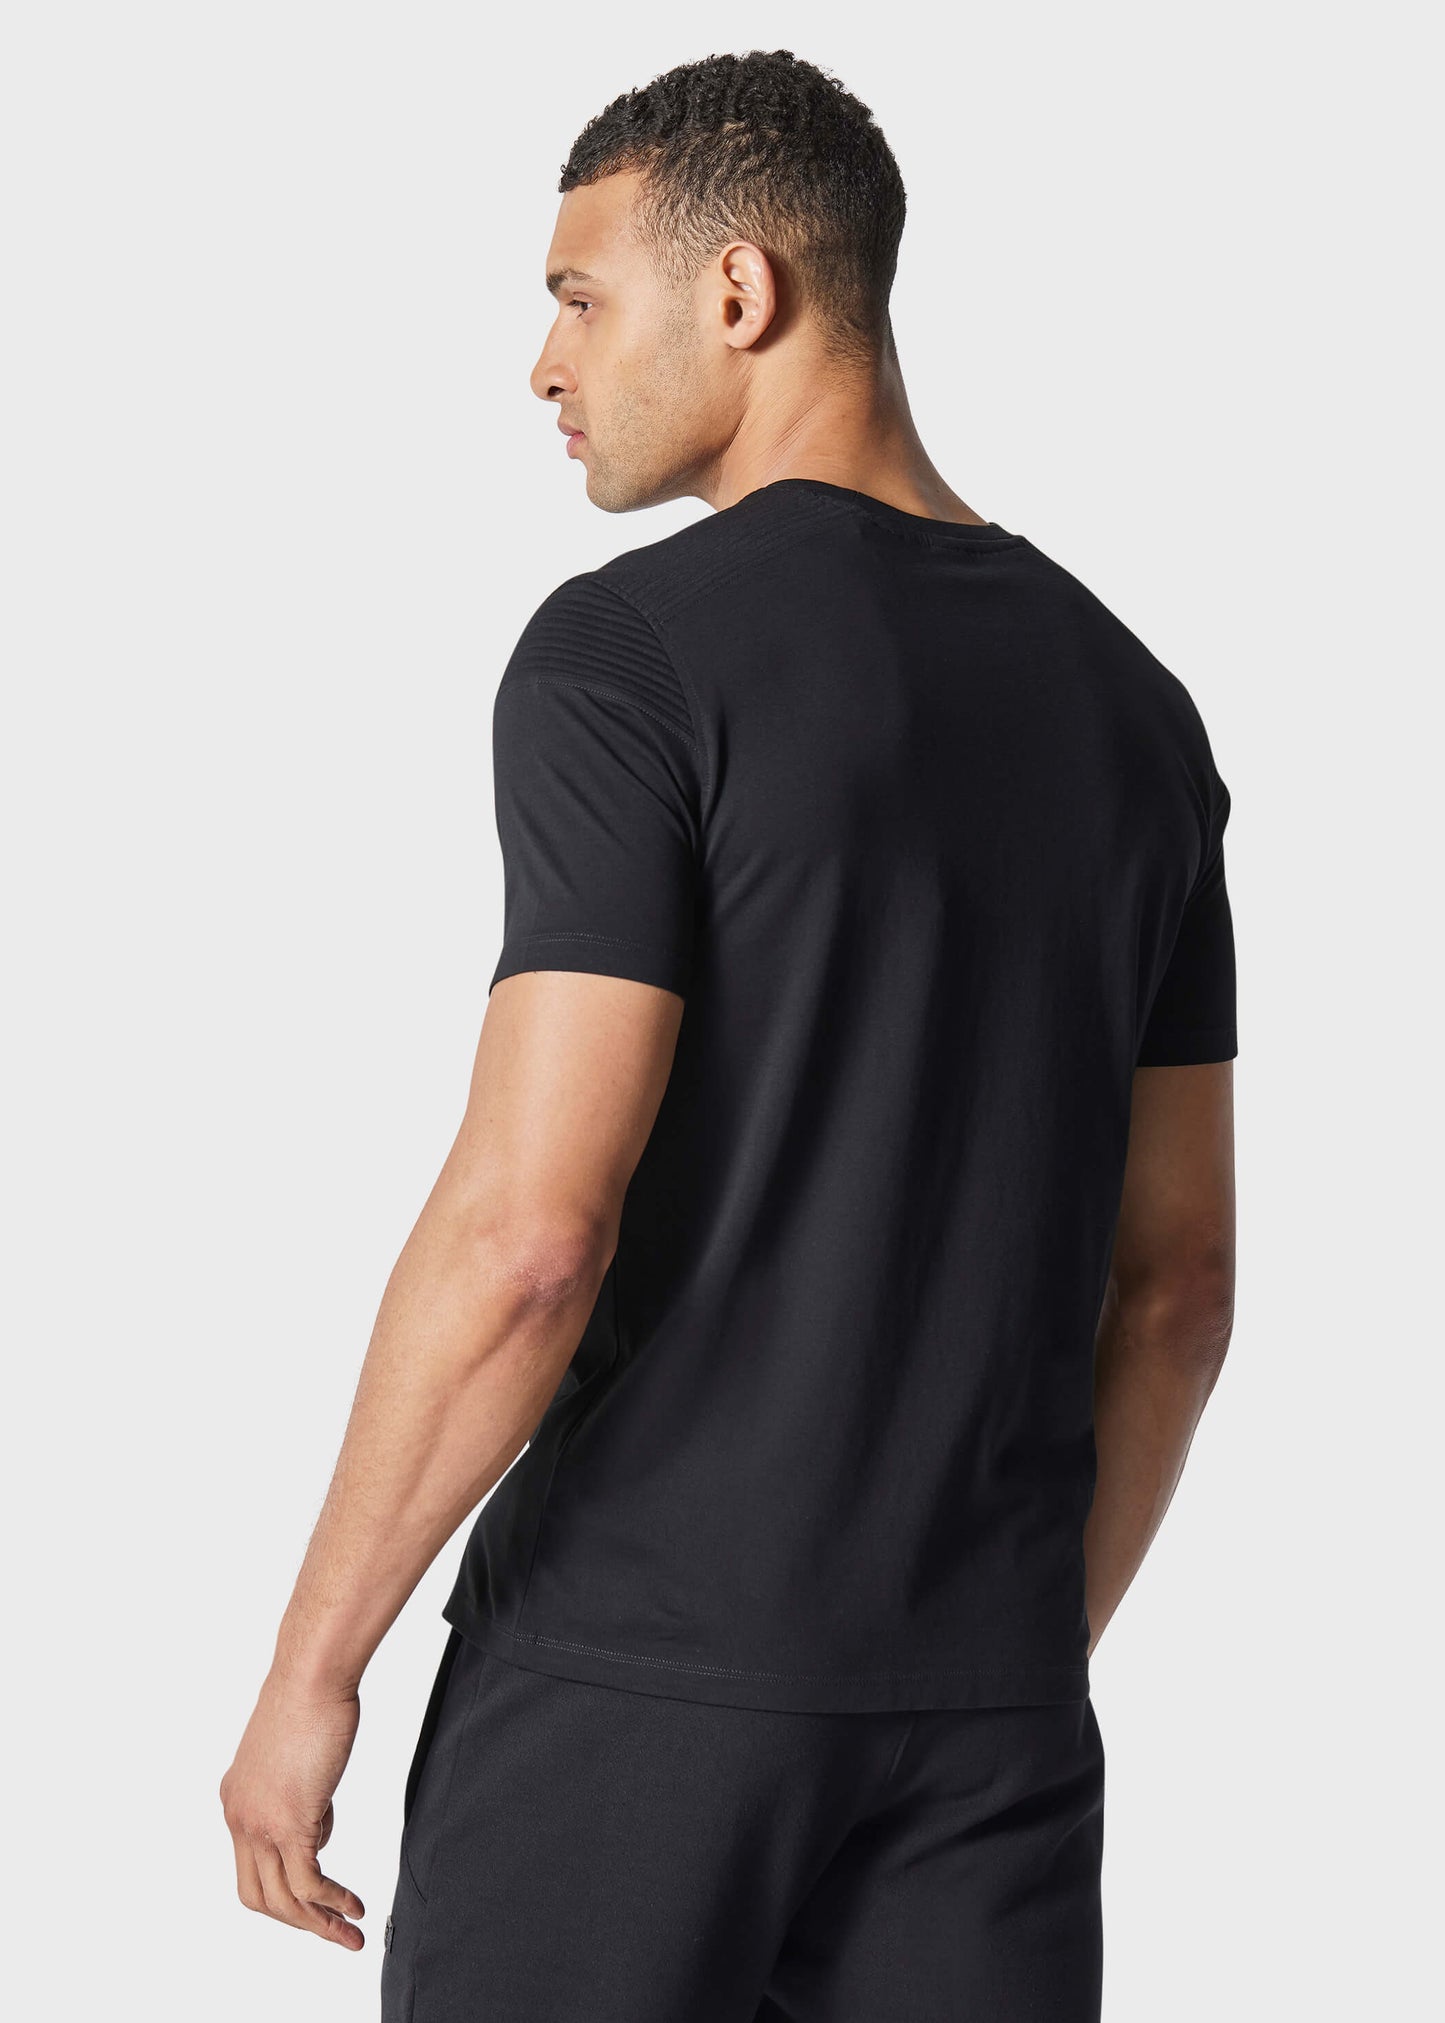 Campro Black T-Shirt